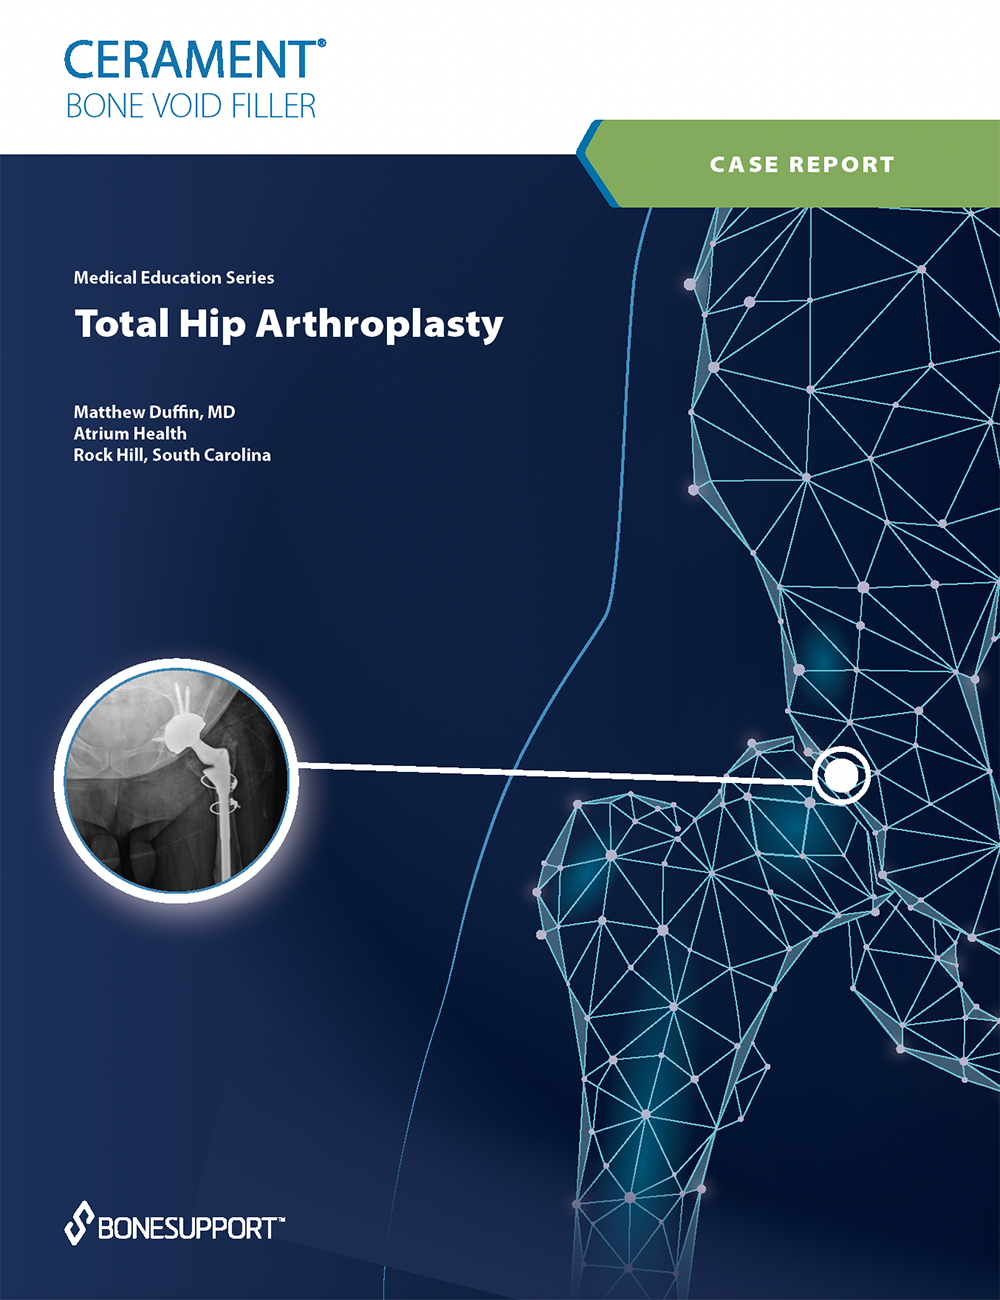 Total Hip Arthroplasty with CERAMENT BONE VOID FILLER  Matthew Duffin, MD Atrium Health Rock Hill, South Carolina